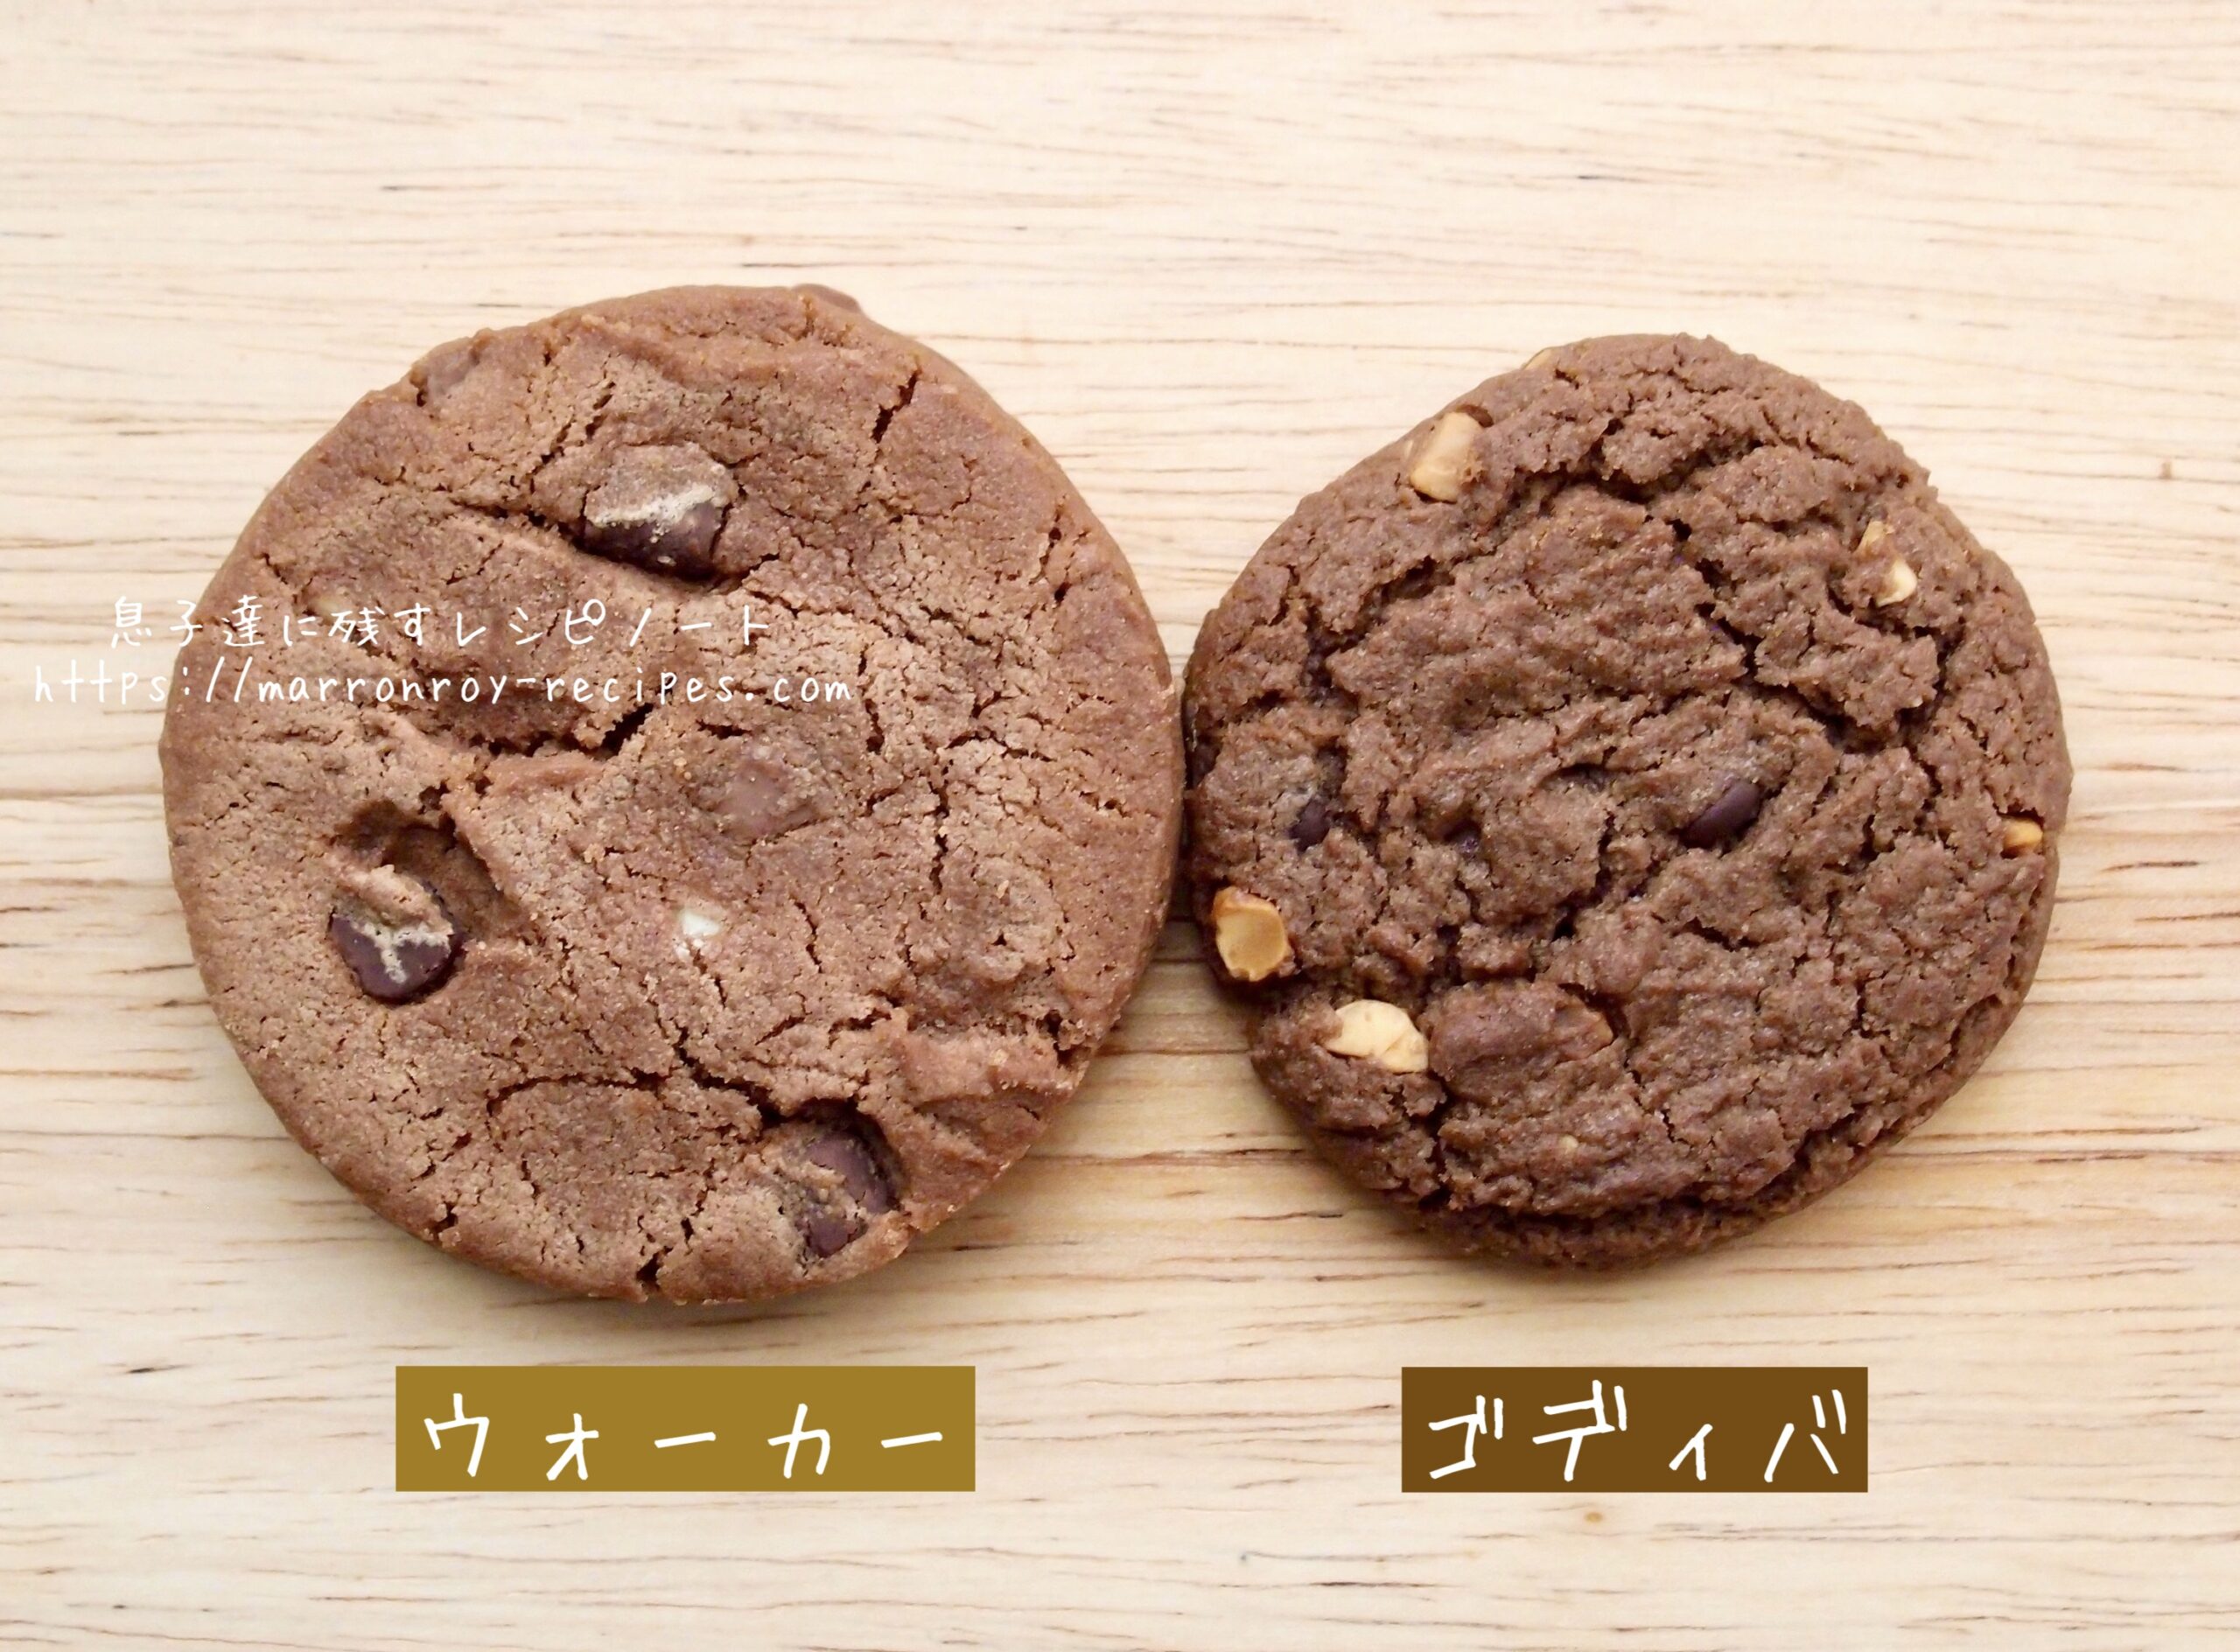 2 cookies